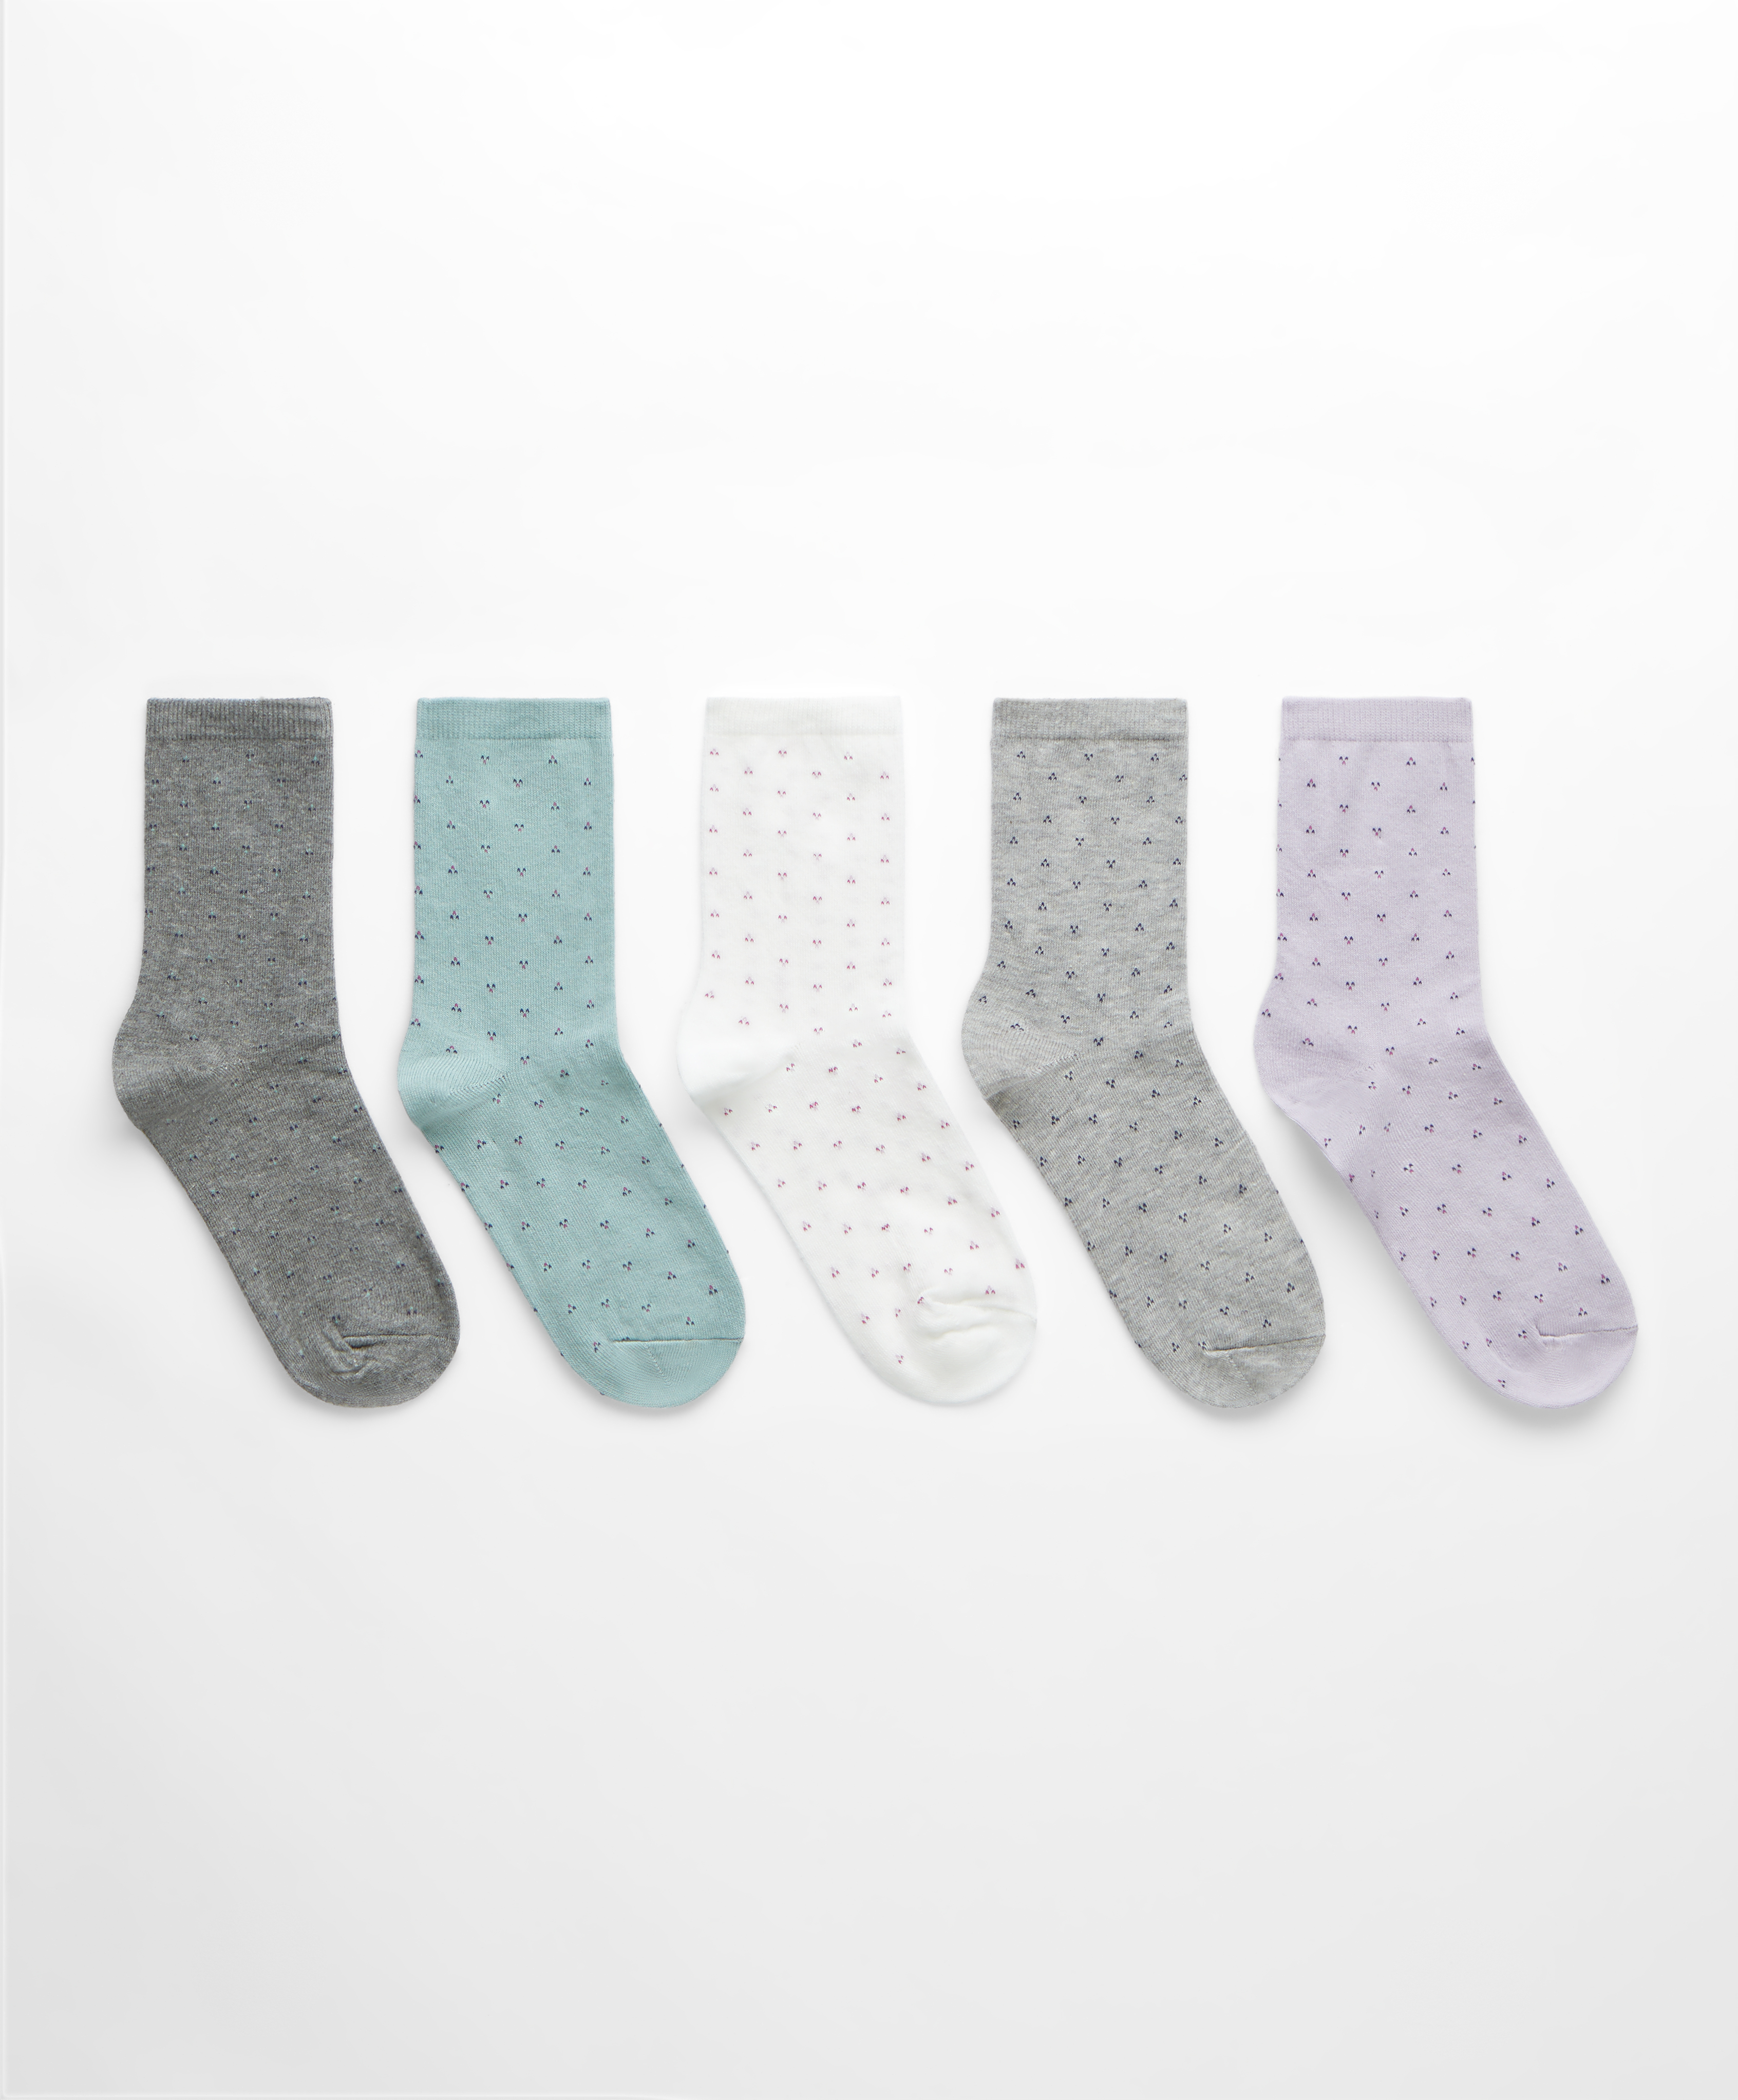 5 pairs of cotton fantasy classic socks